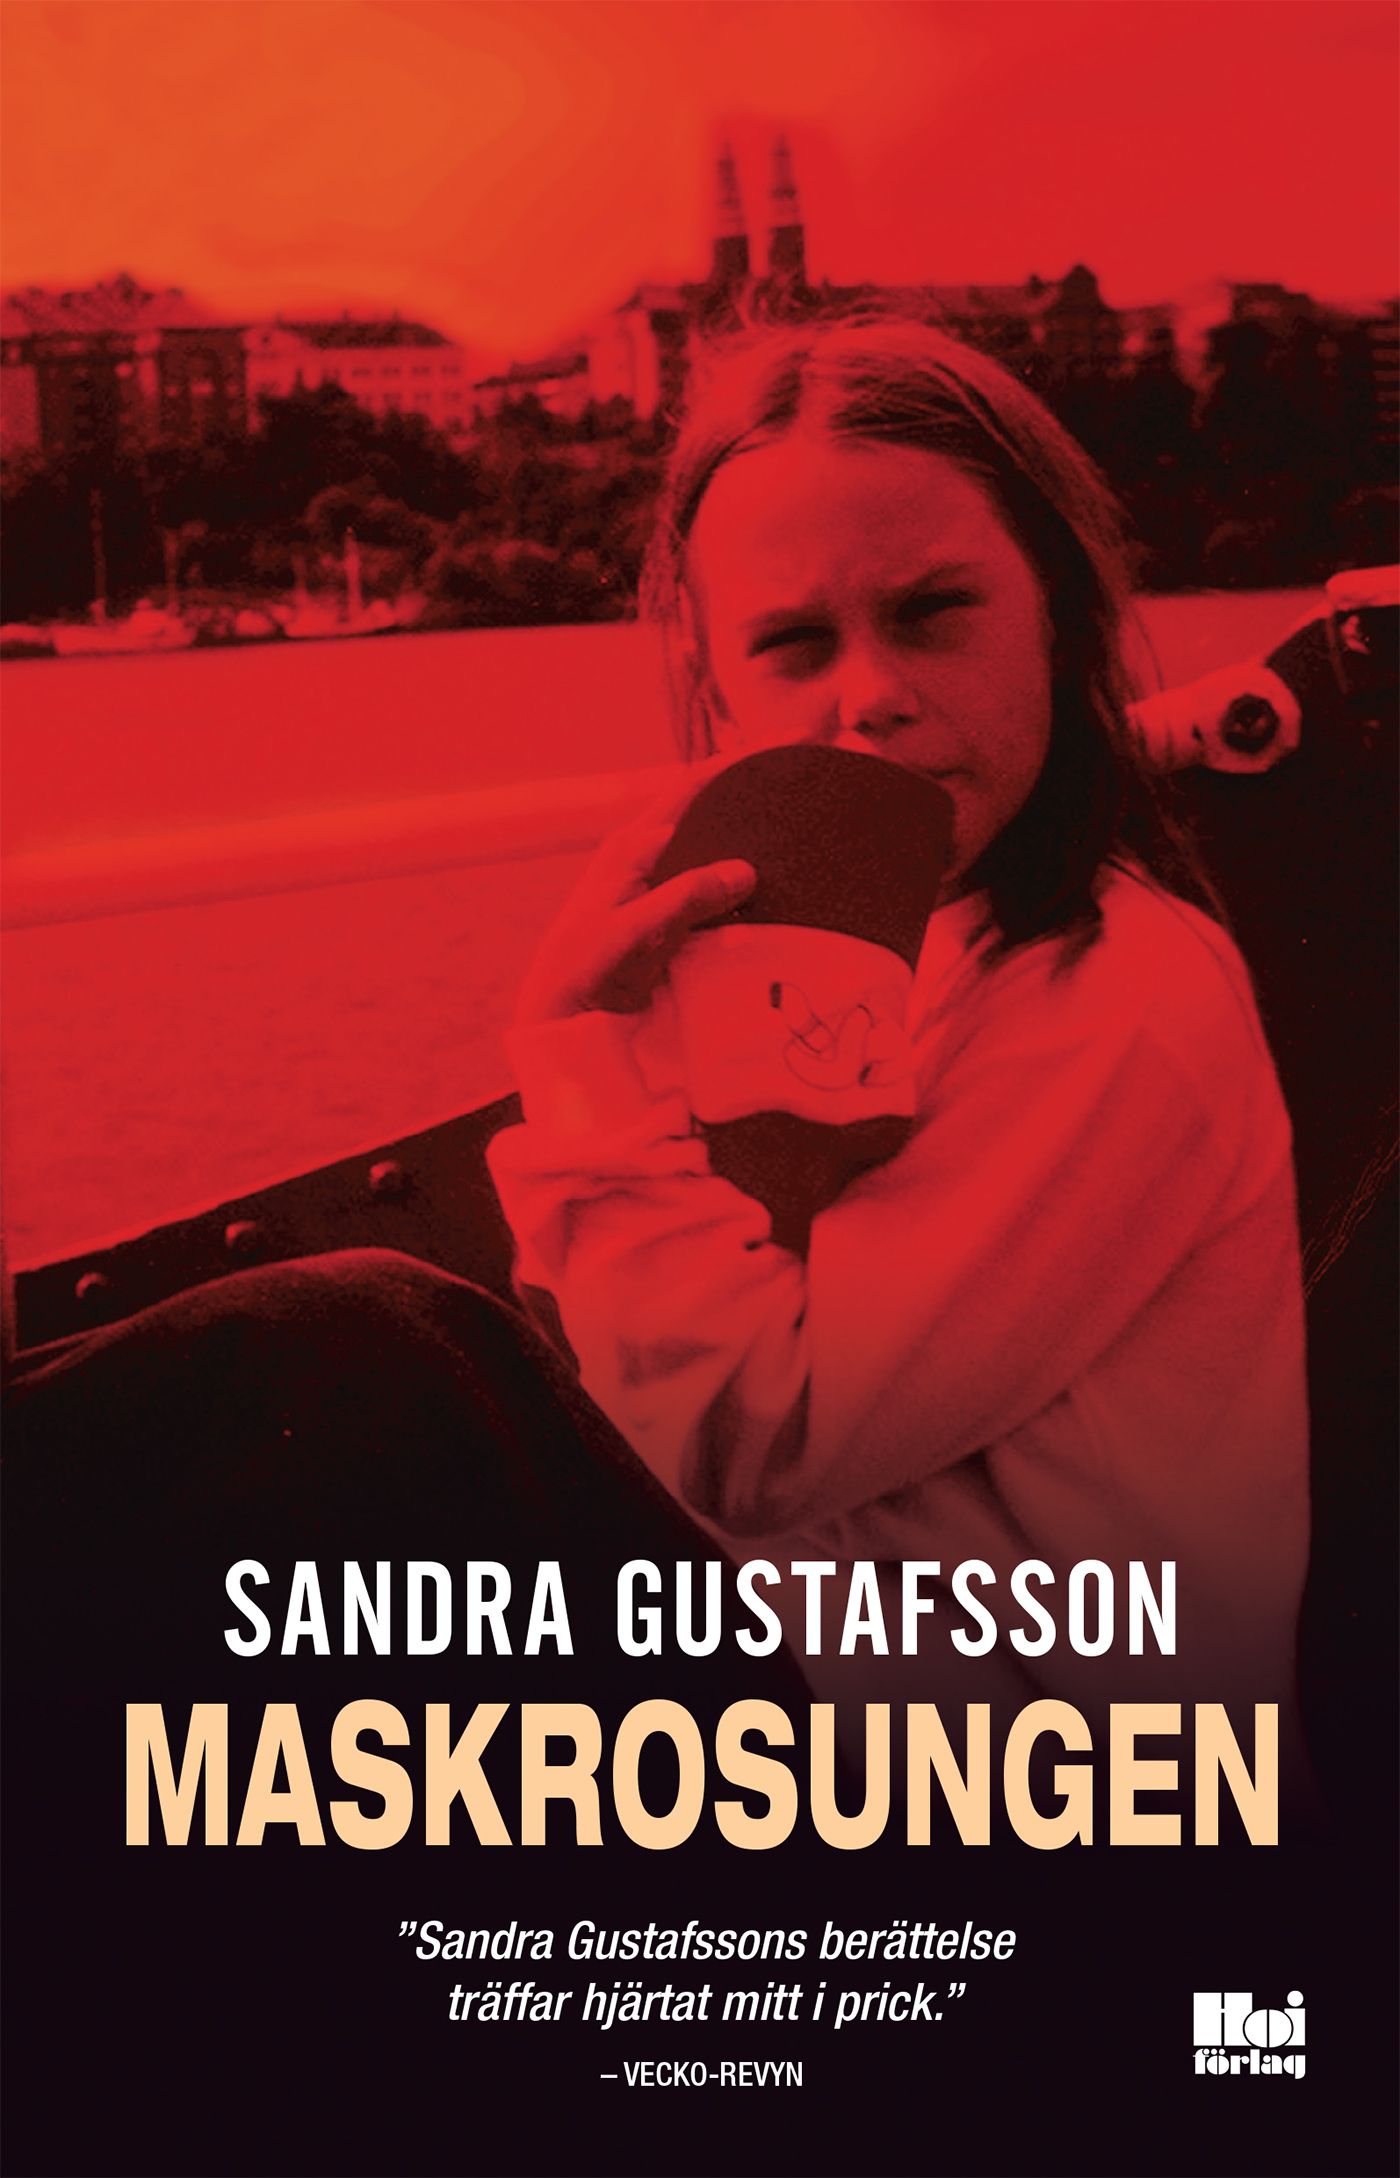 Maskrosungen, eBook by Sandra Gustafsson